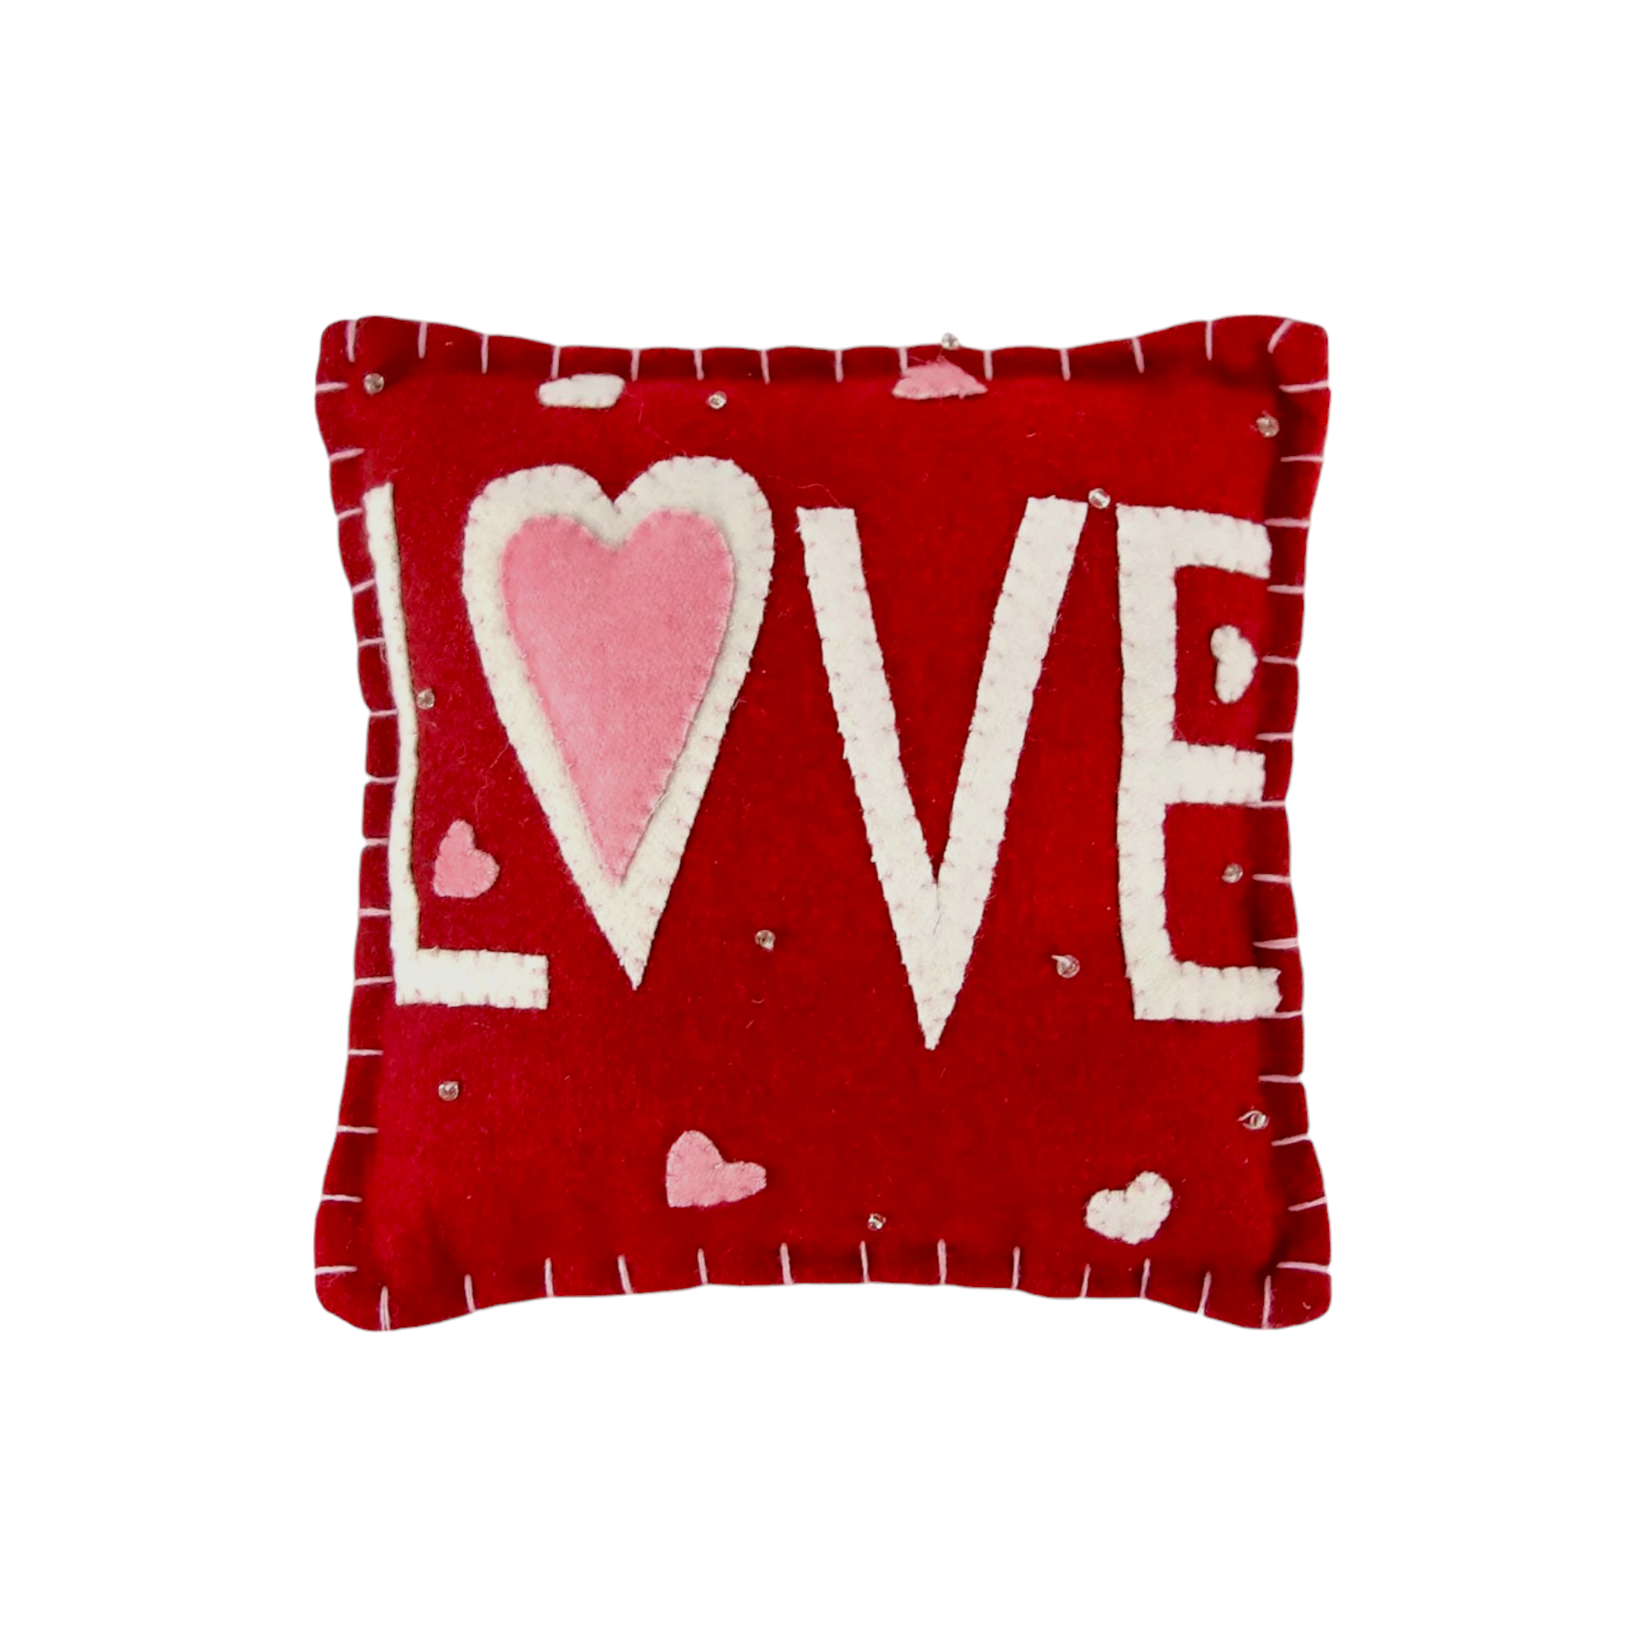 Stitch By Stitch Red "Love" Pillow